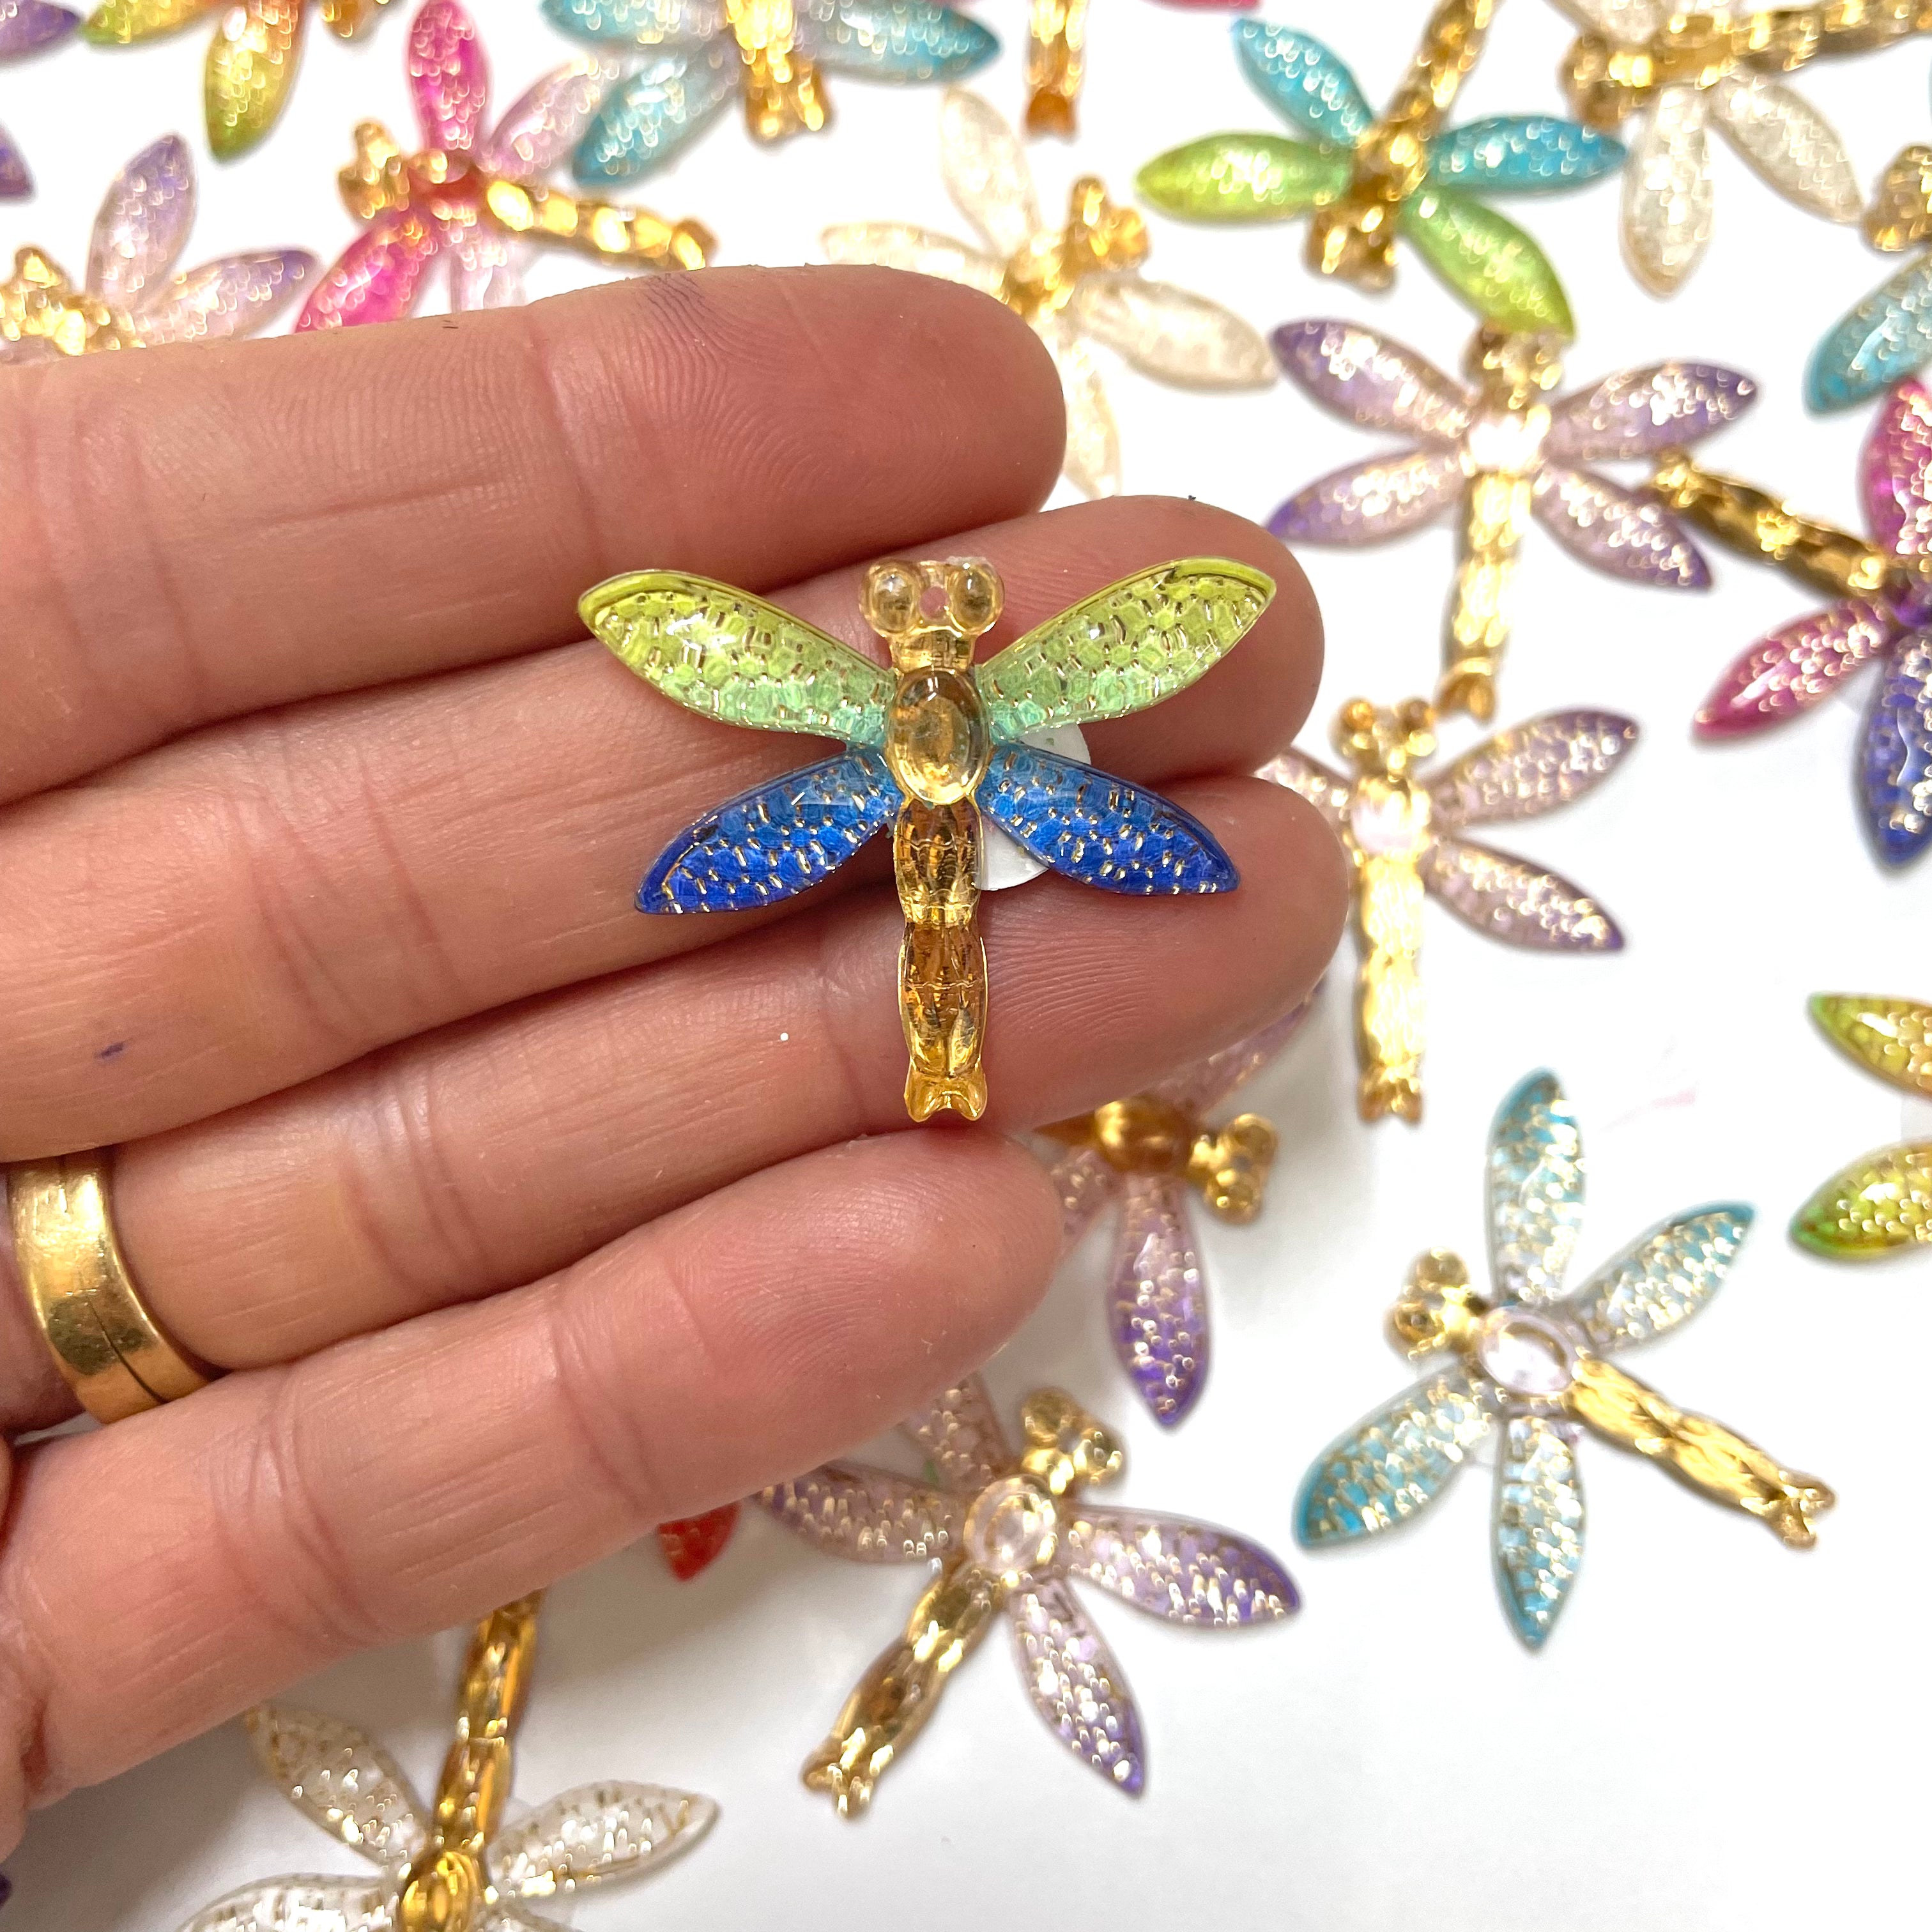 Fairy Garden Terrarium Miniature Resin Self-Adhesive  Dragonflies x 40 pcs - Assorted